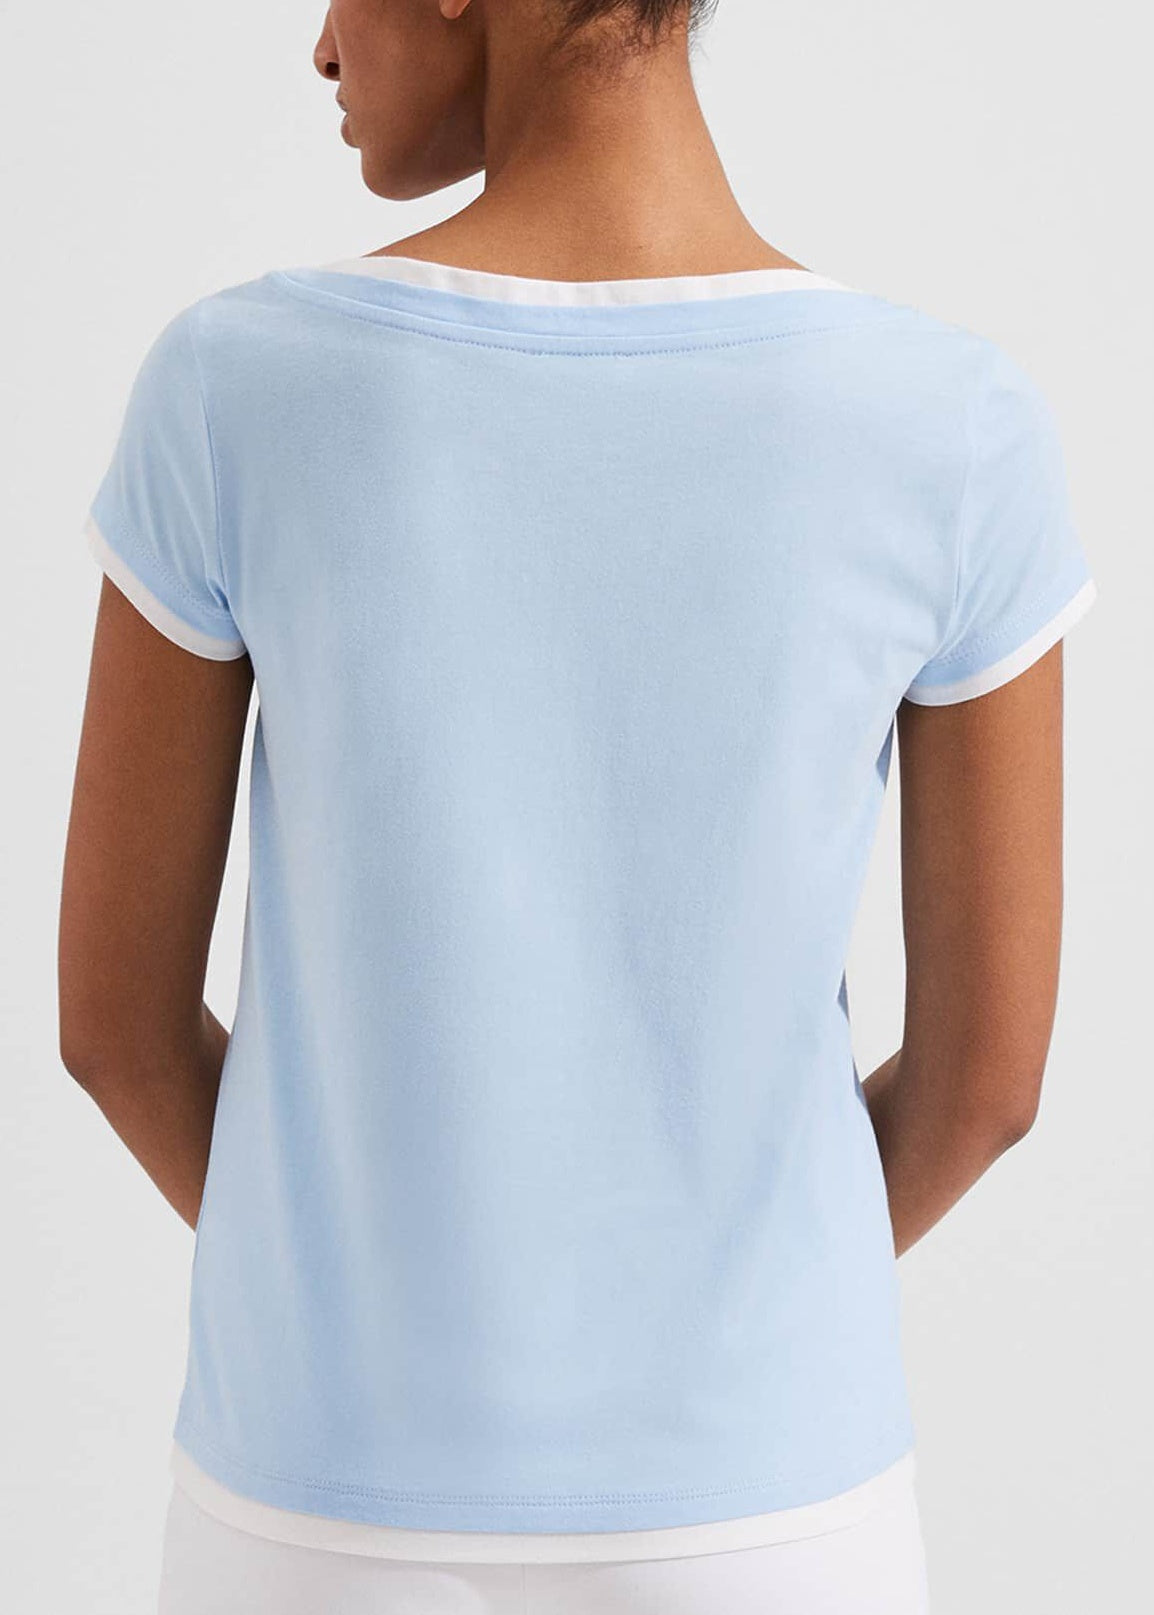 Peony T-shirt 0123/2817/1144l00 Blue-Ivory